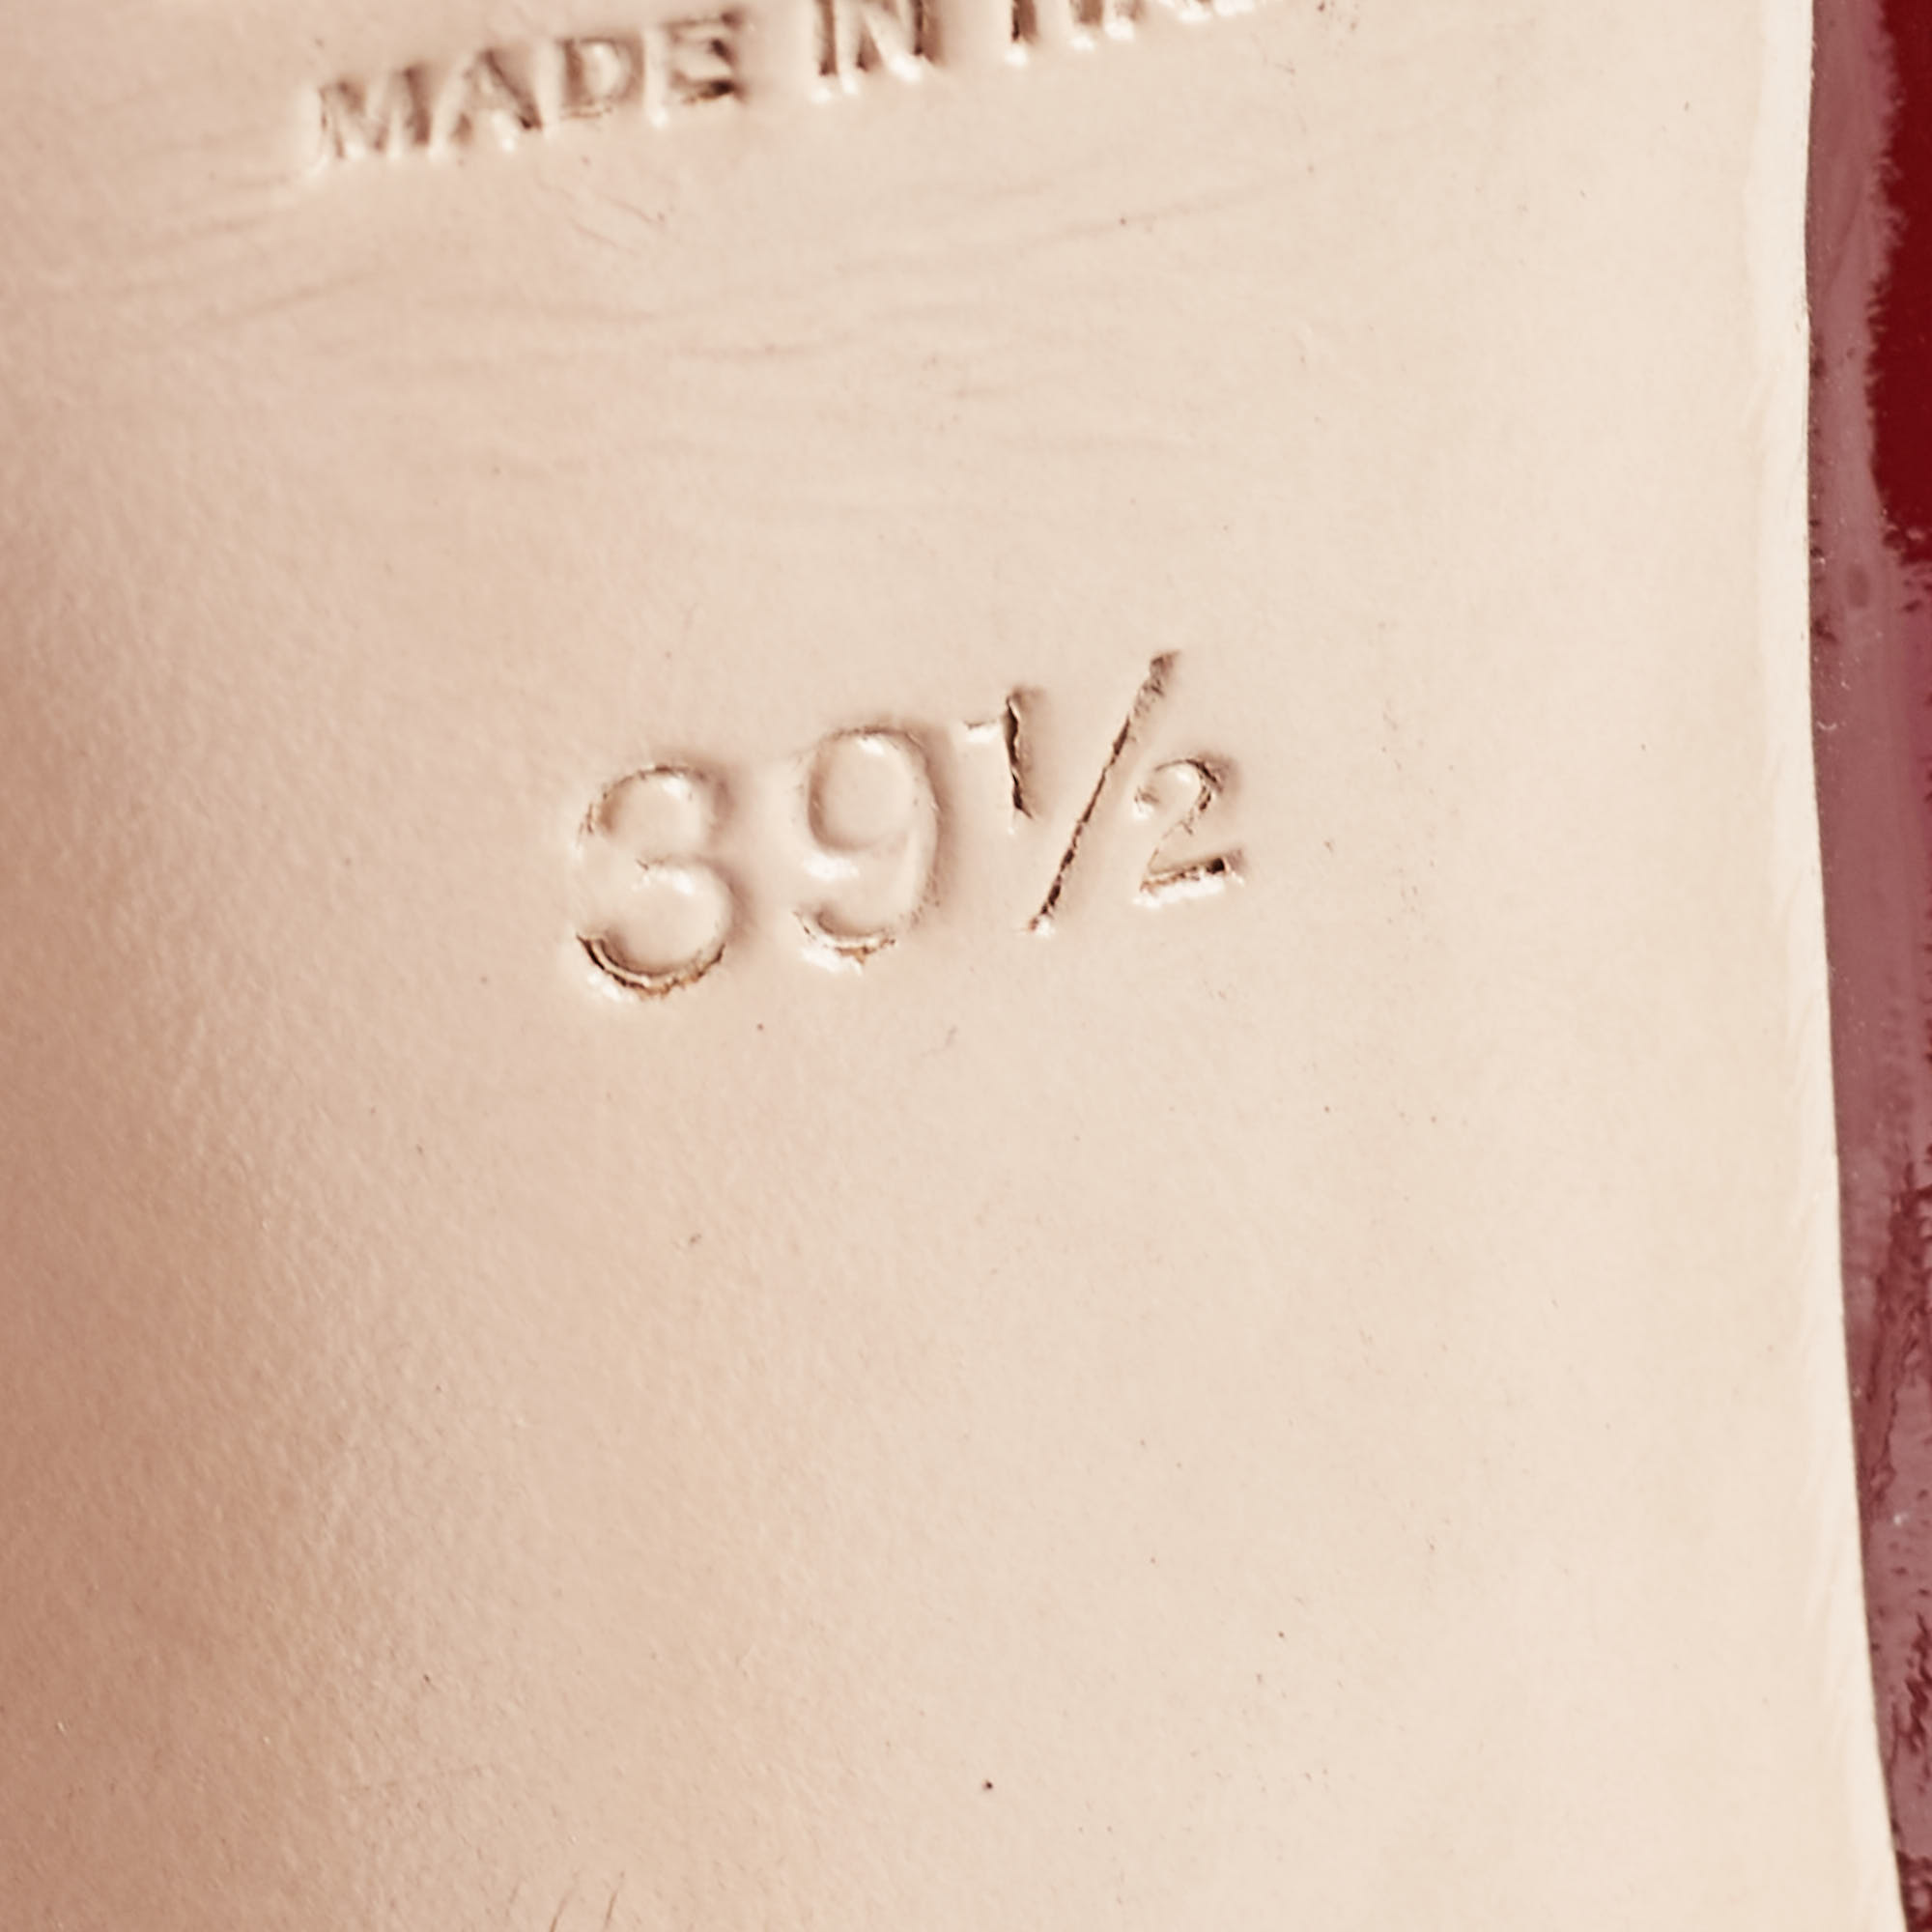 Miu Miu Burgundy Patent Leather Penny Loafer Platform Pumps Size 39.5